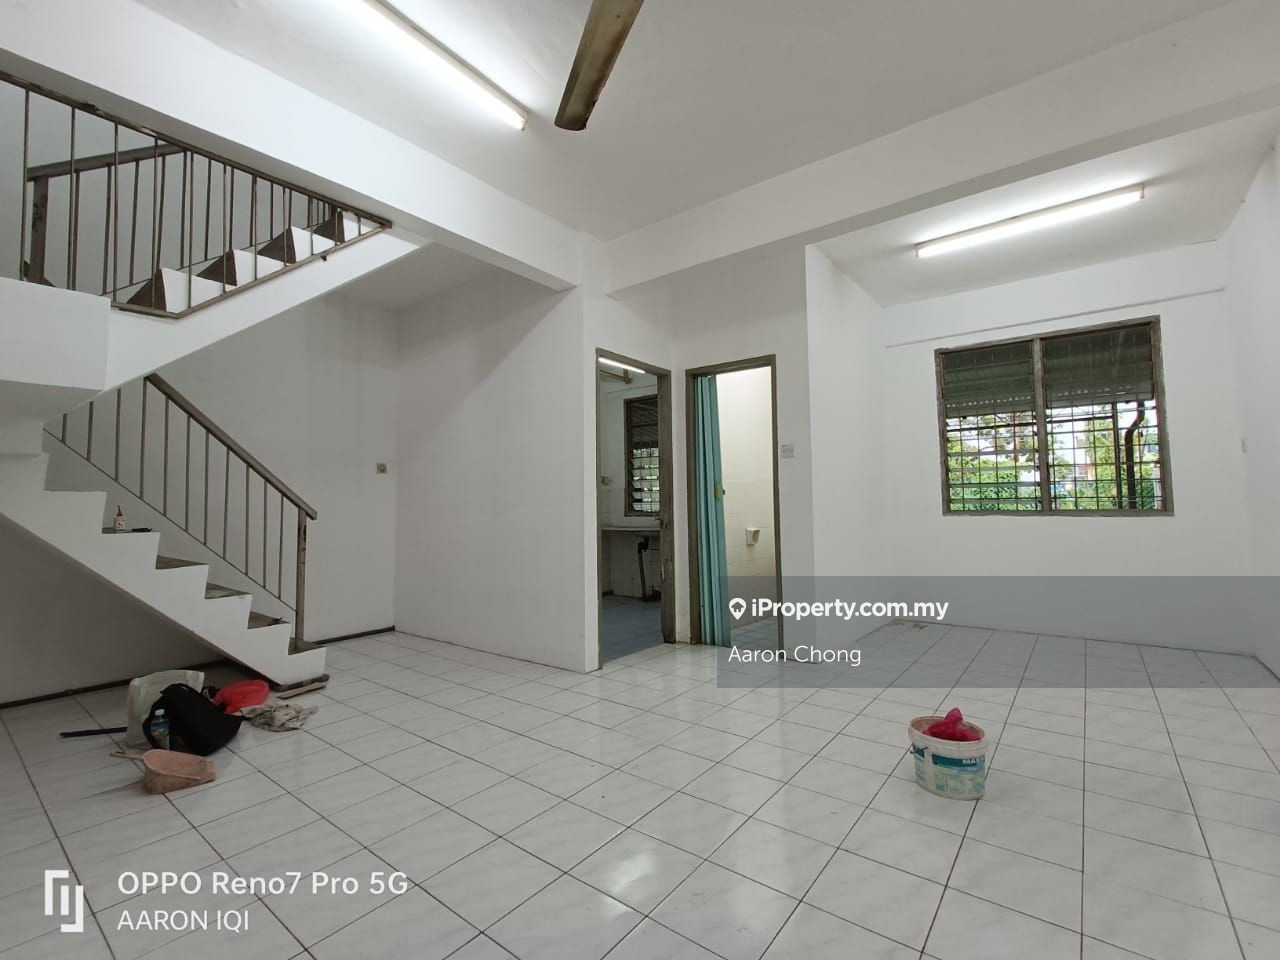 Taman Sri Baru 2-Storey Landed House Menggatal Kota Kinabalu For Rent